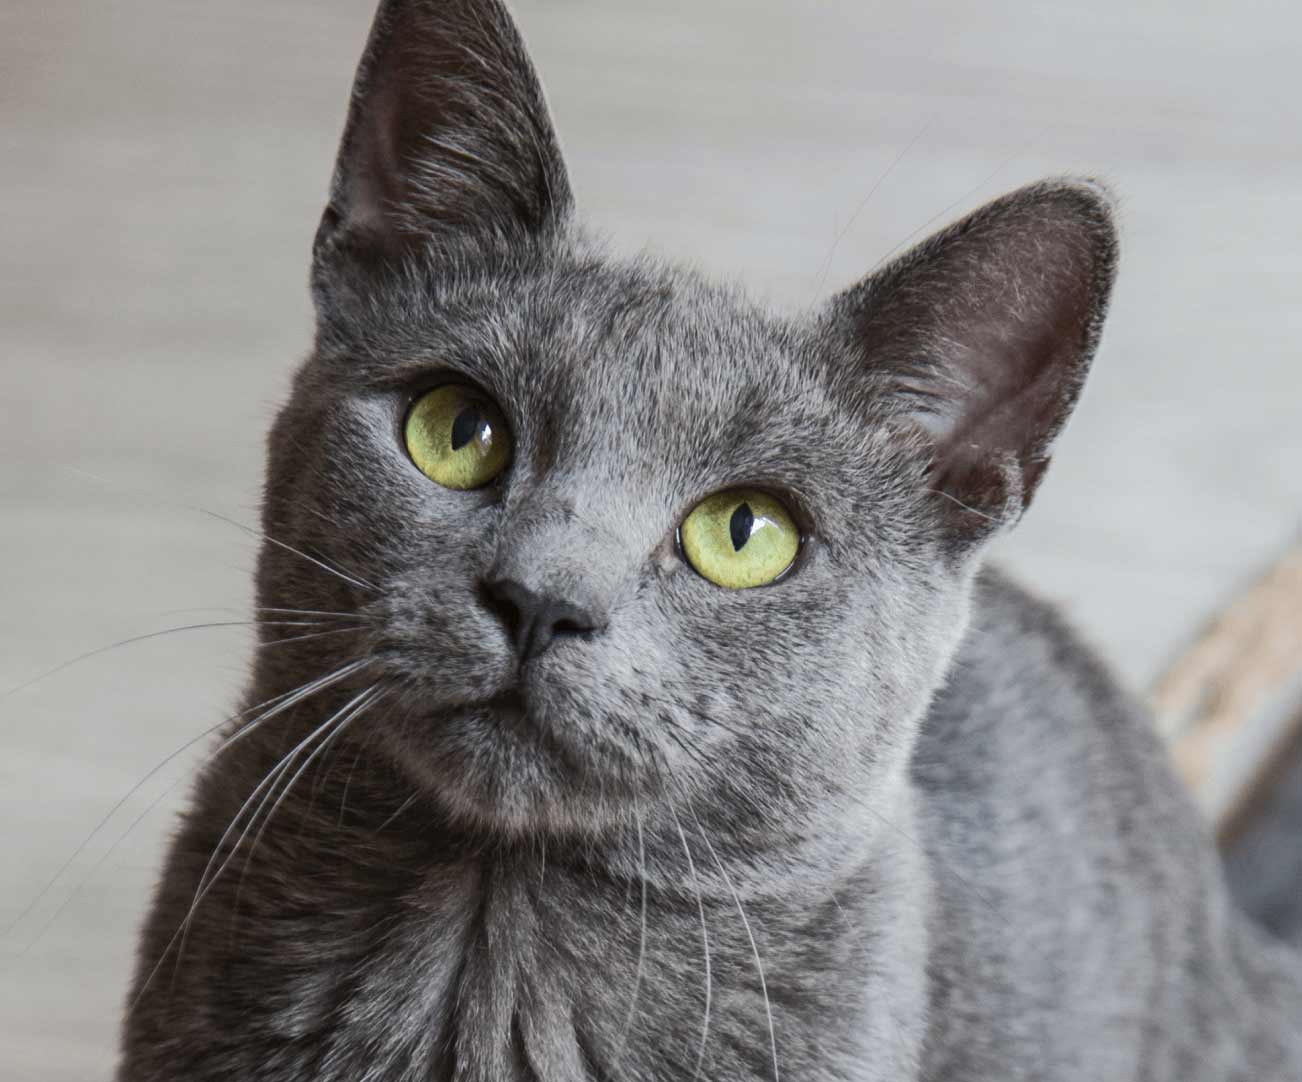 Grey cat with green eyes looking up towards camera.